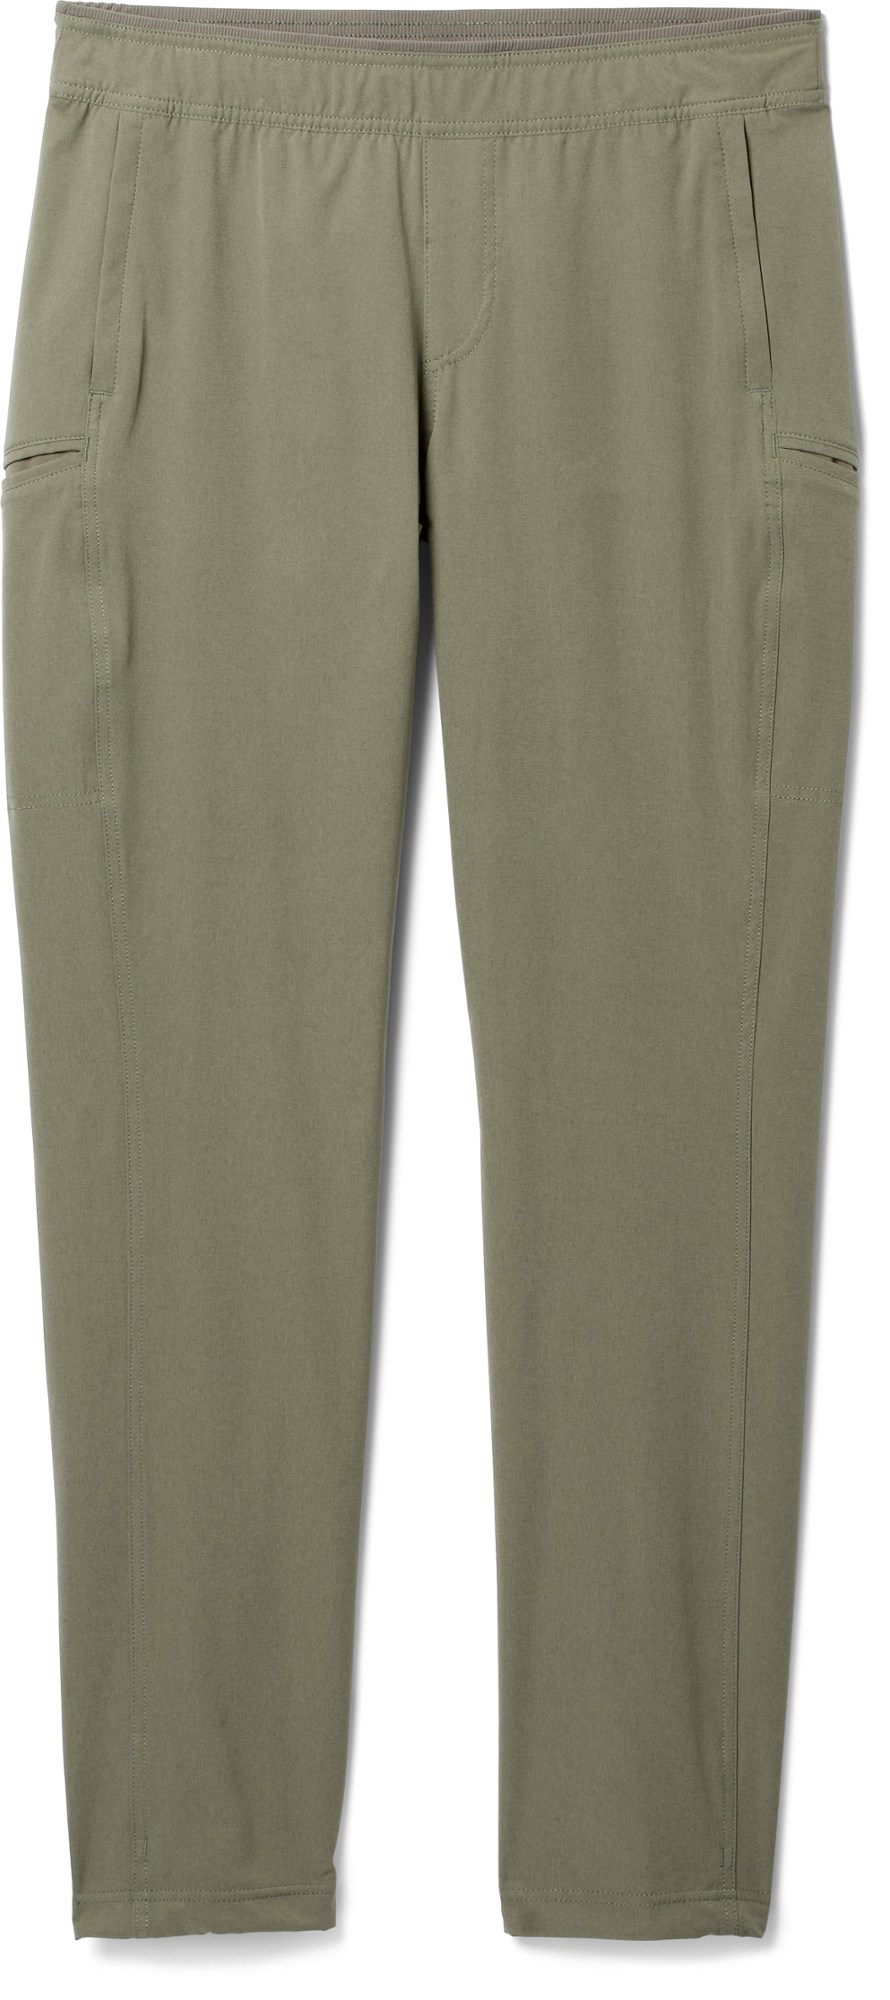 LOLE / 6 / Women's Travel Outdoor Hiking Canvas Straight Leg Pants - Grey  Cream